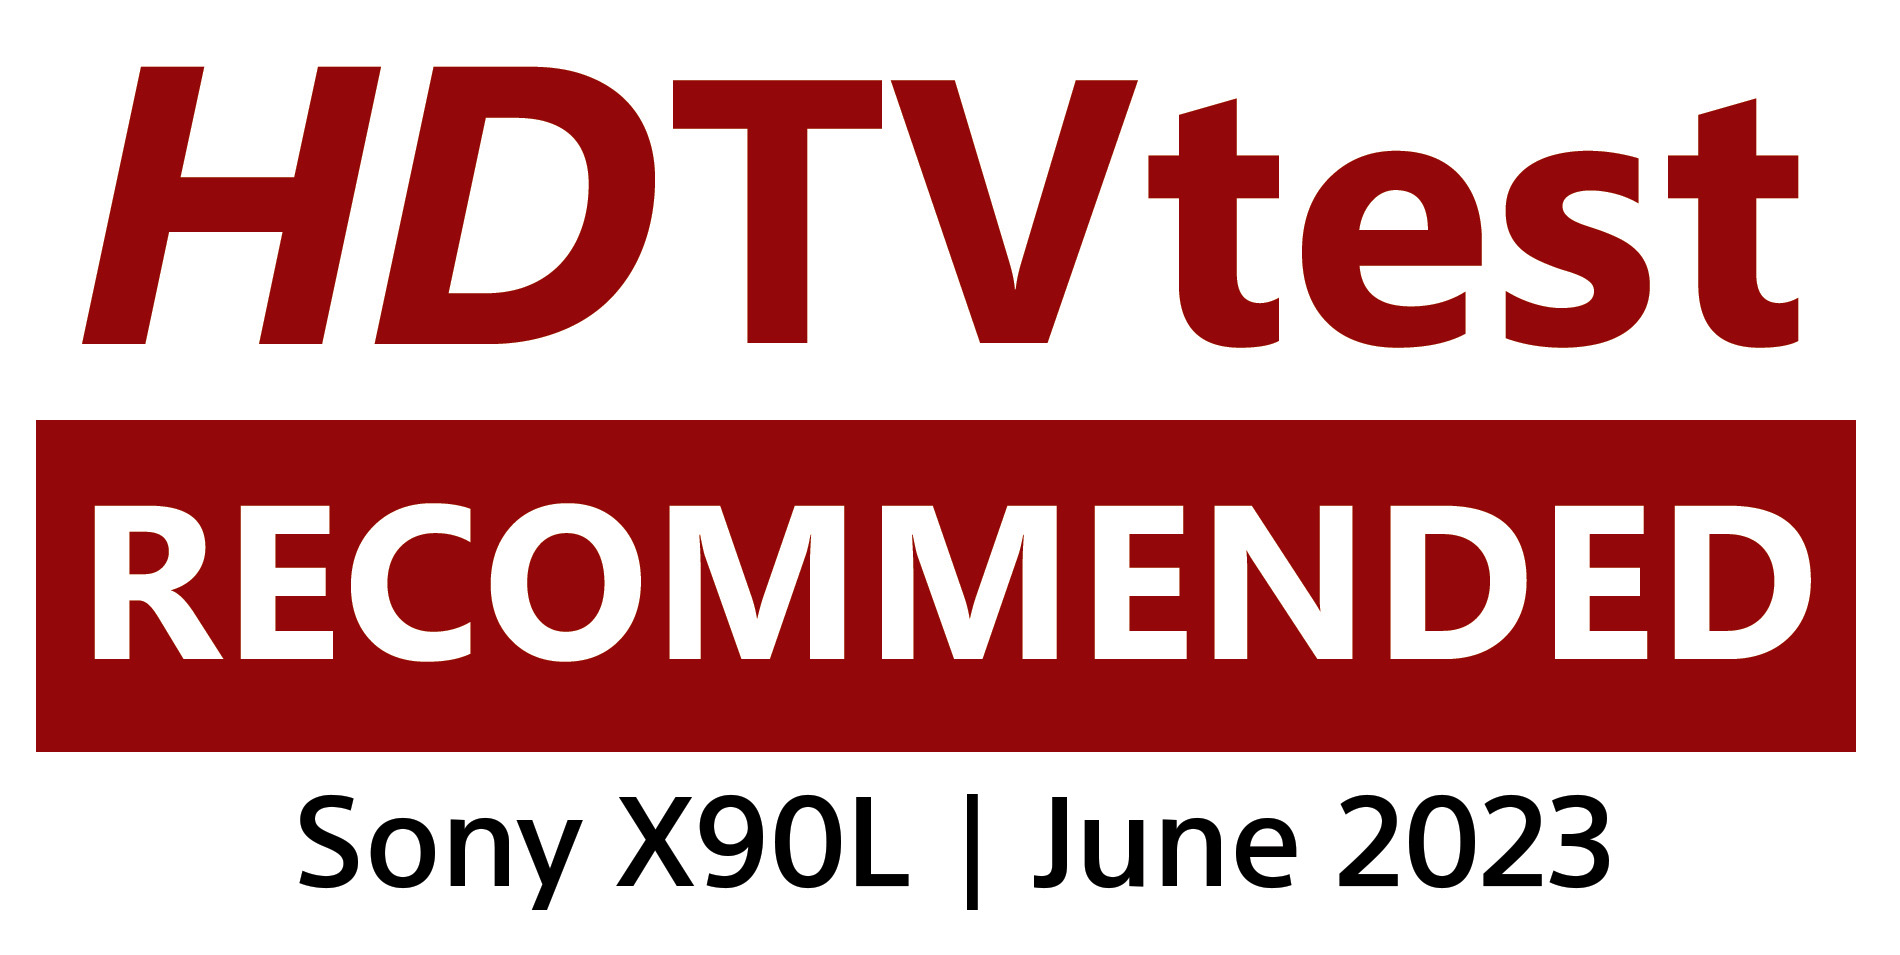 HDTV-Test-Recommended-X90L.jpg